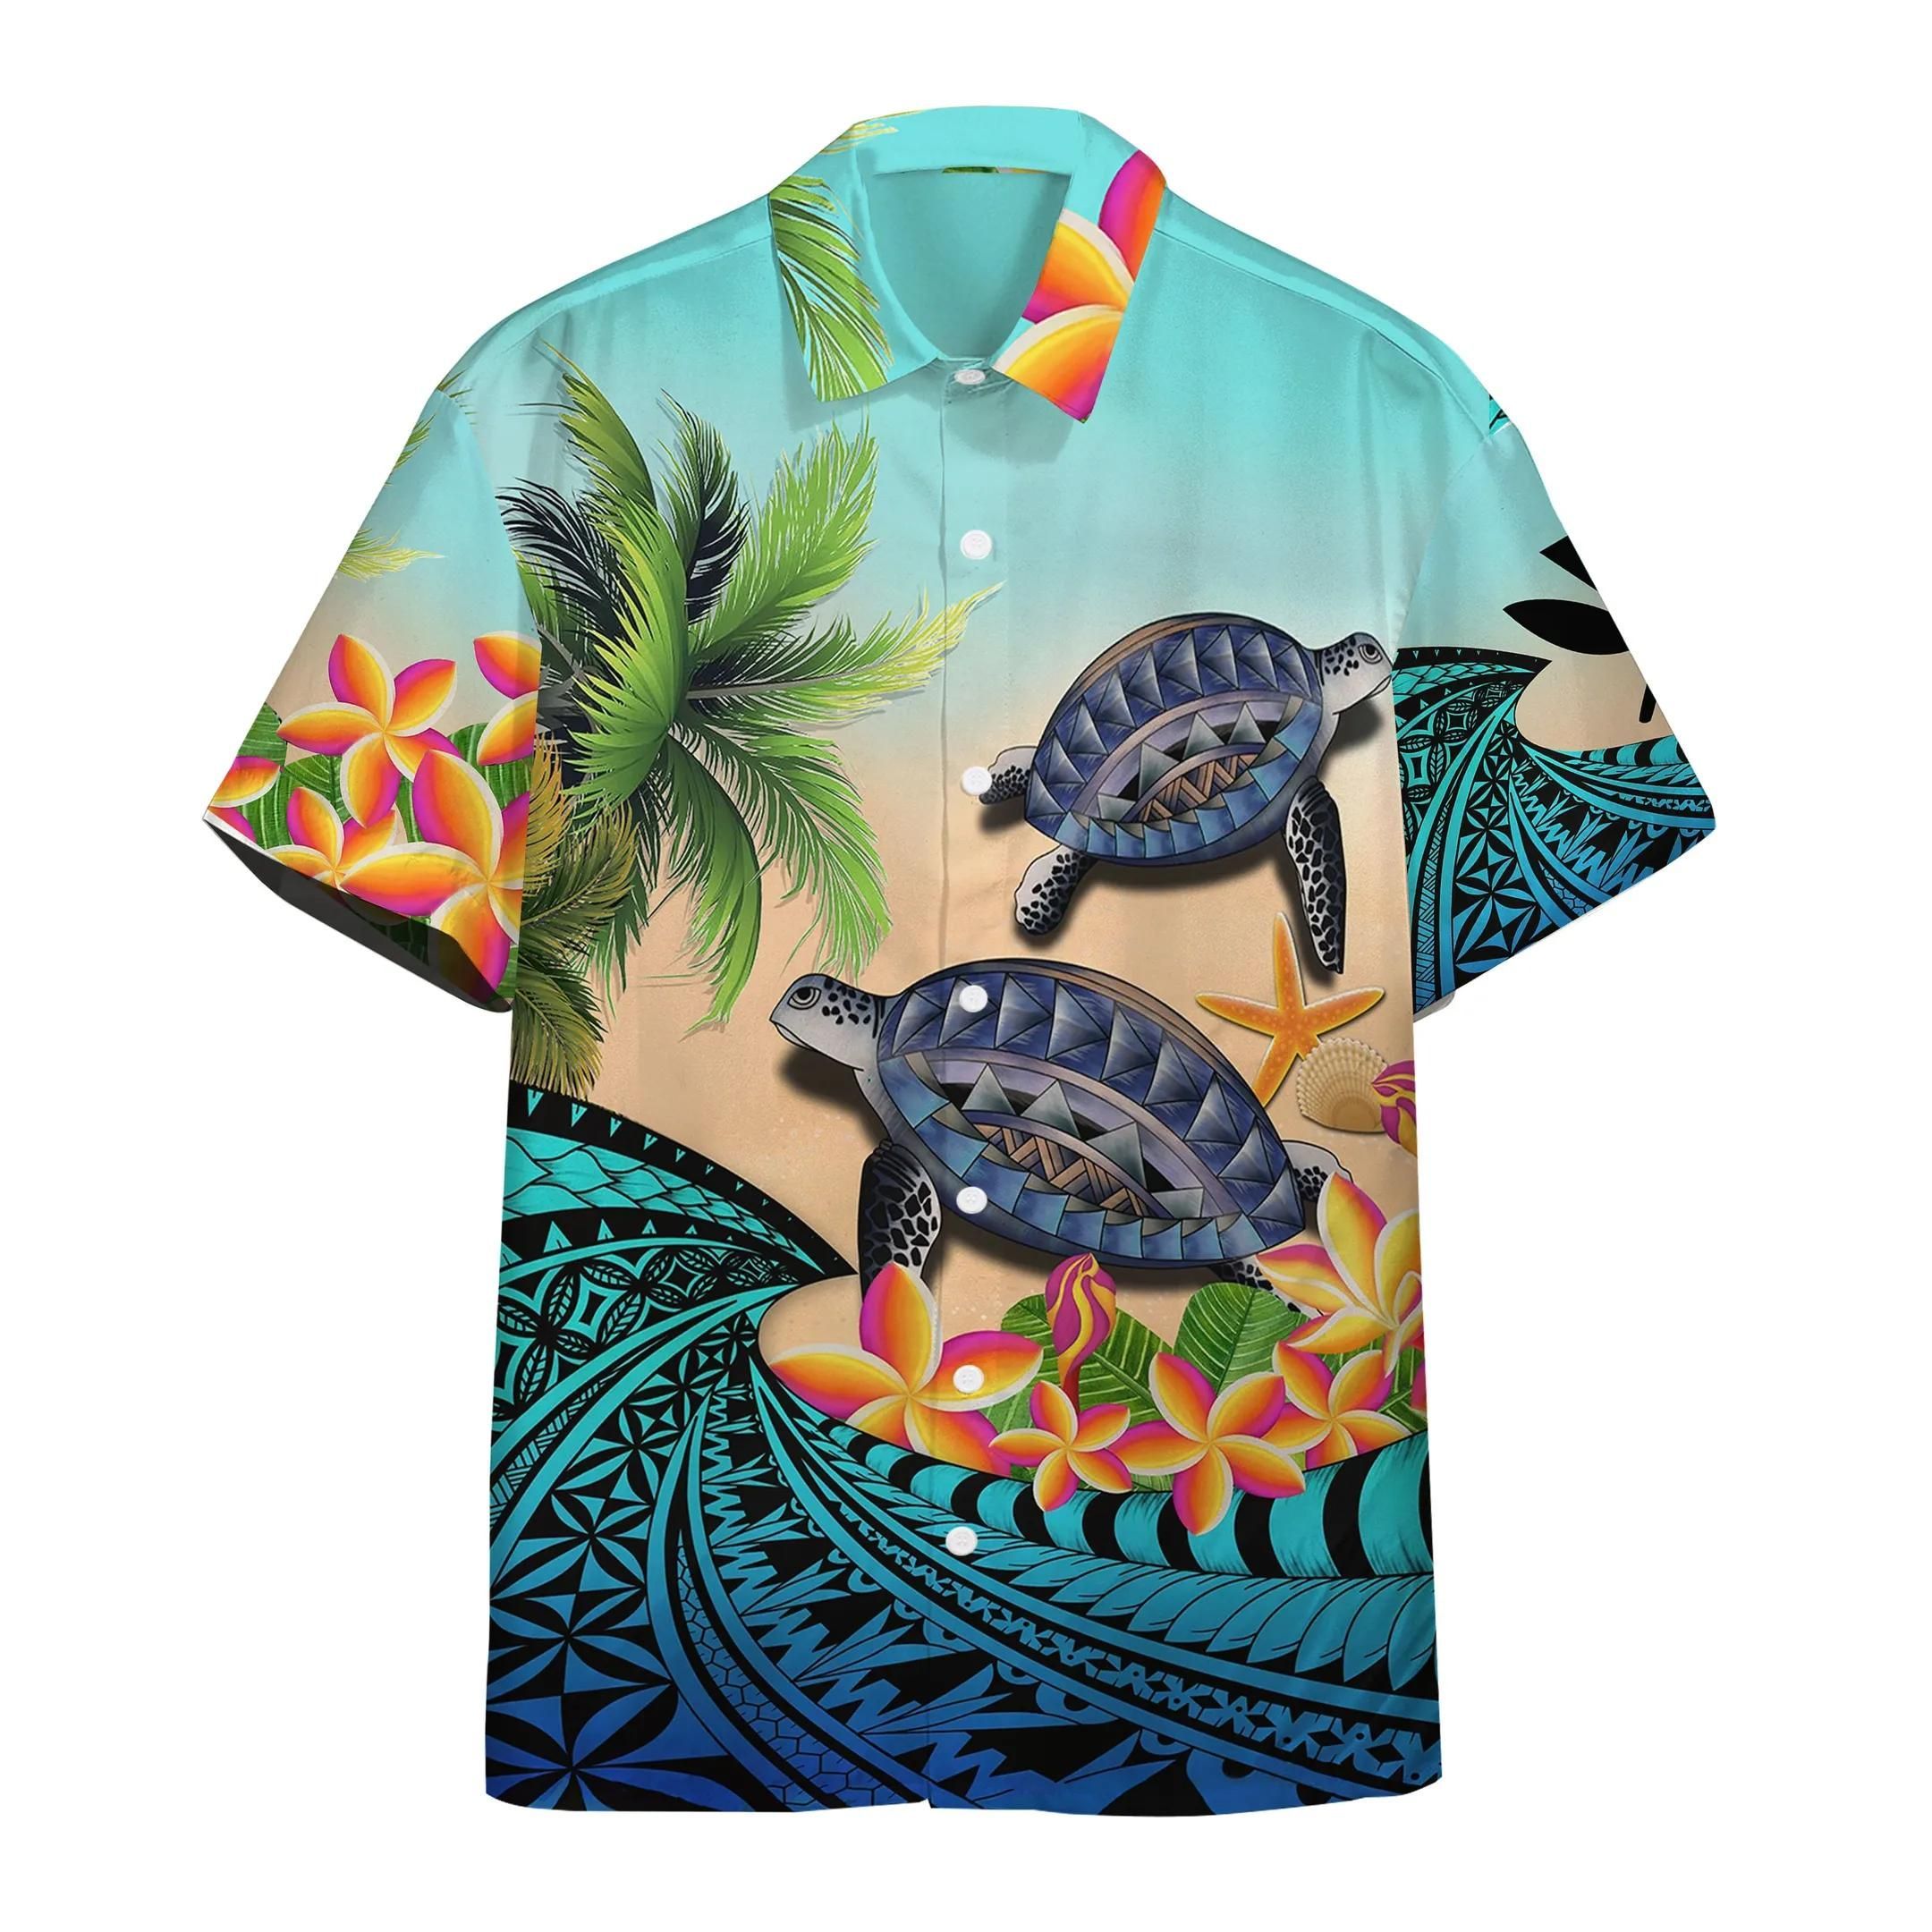 Turtle Coconut Aloha Hawaiian Shirt Colorful Short Sleeve Summer Beach Casual Shirt For Men And Women